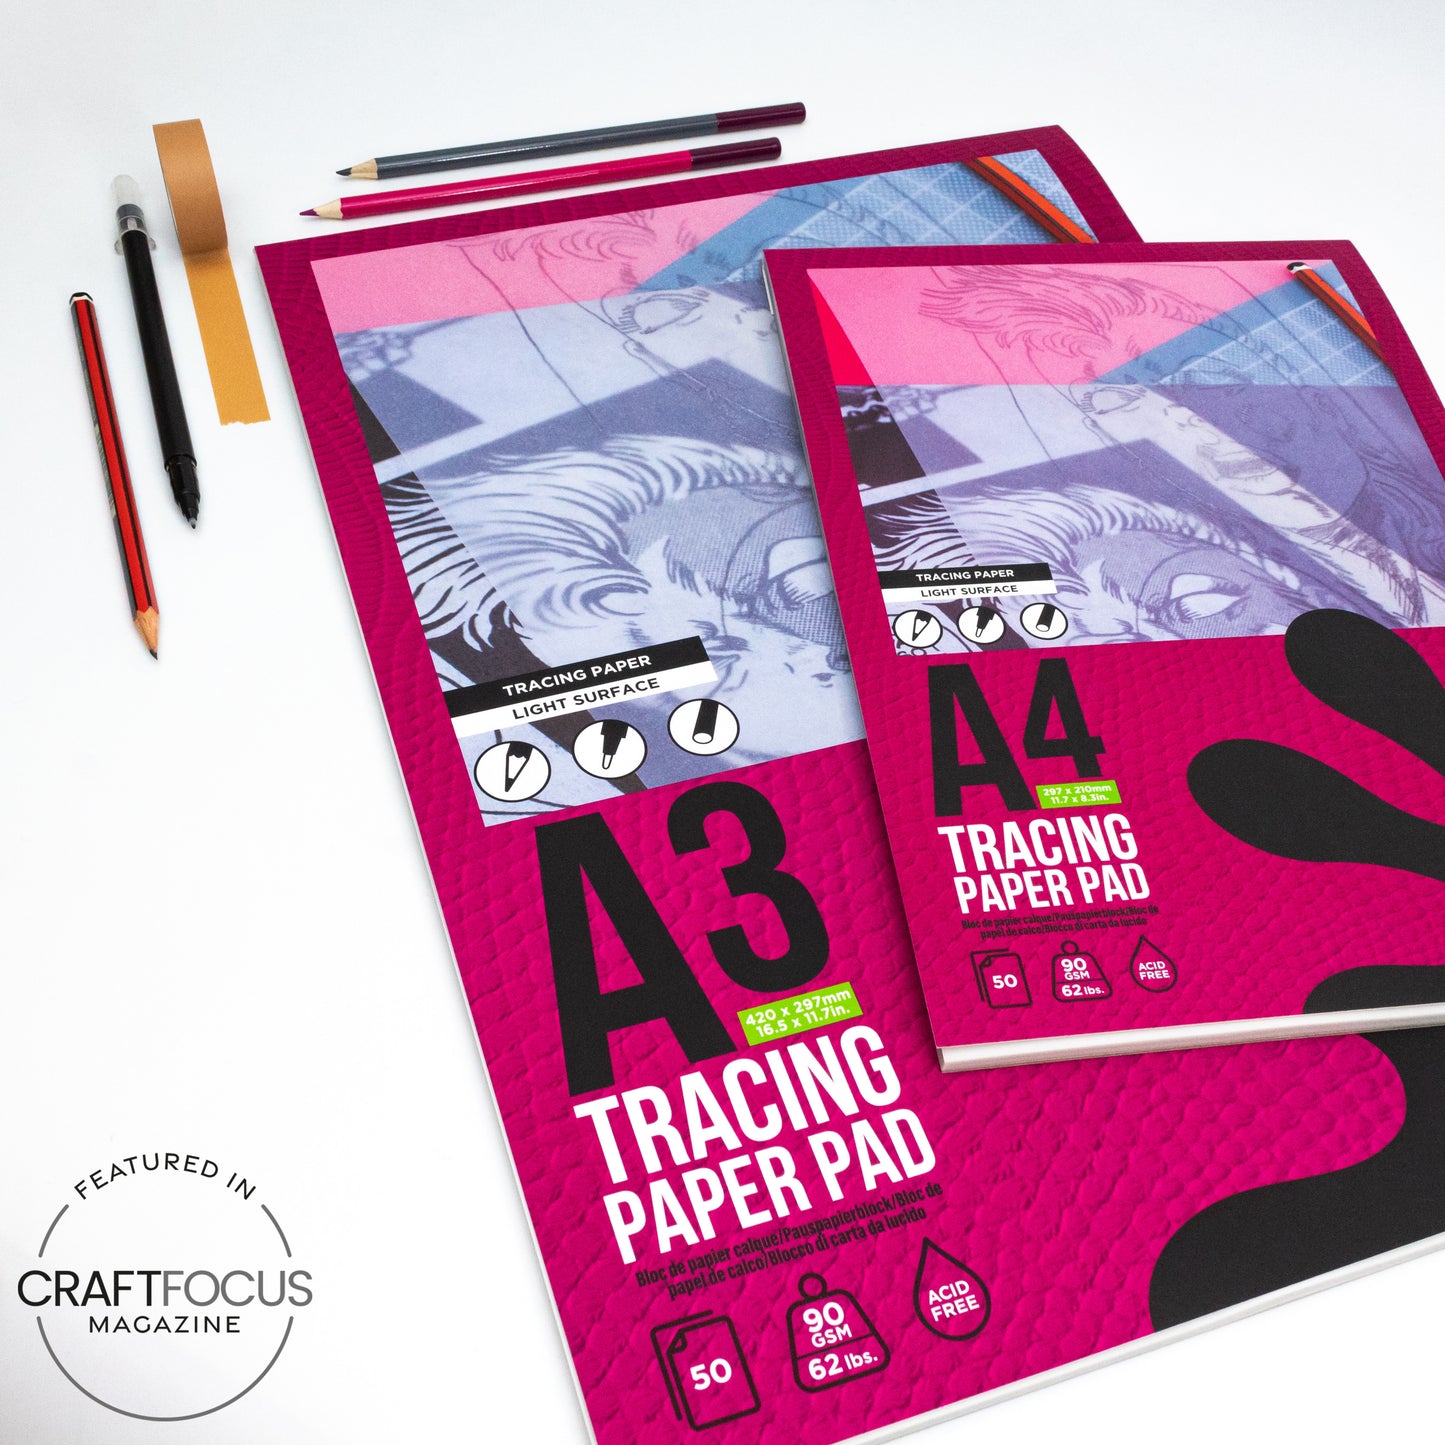 Artgecko 90gsm, light surface, tracing paper pad.